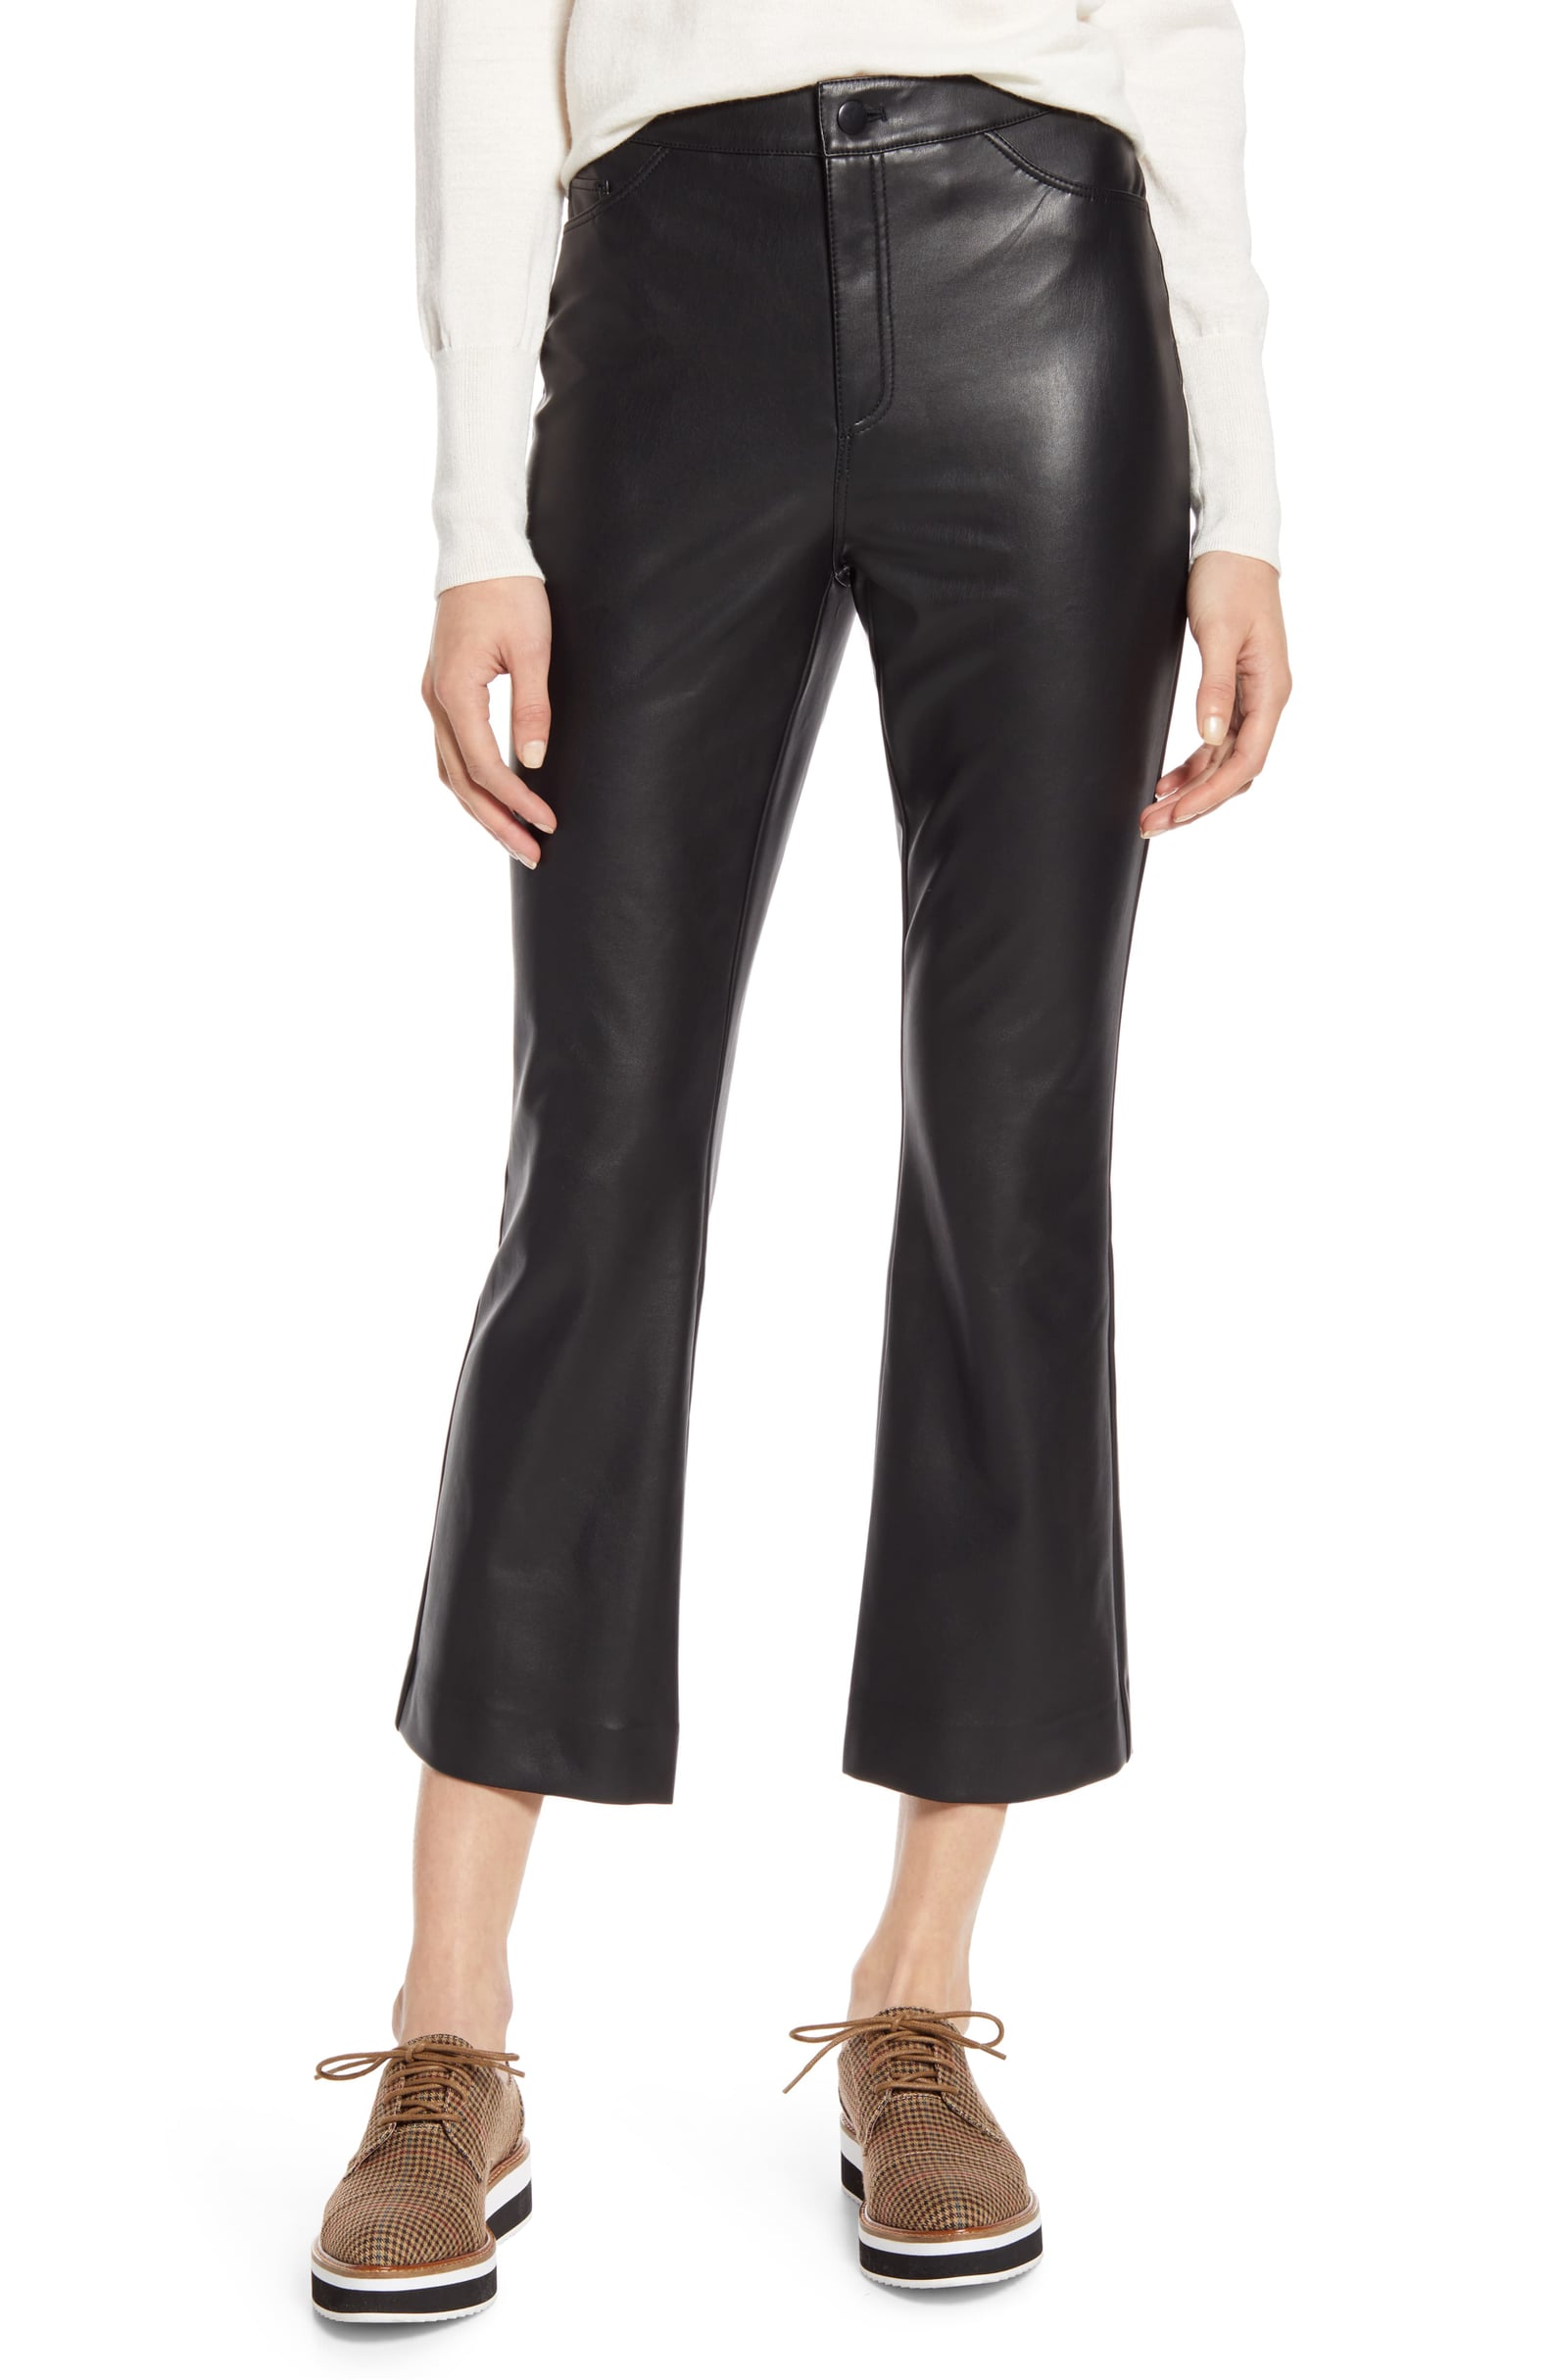 Best Leather Pants For Women 2020 | POPSUGAR Fashion